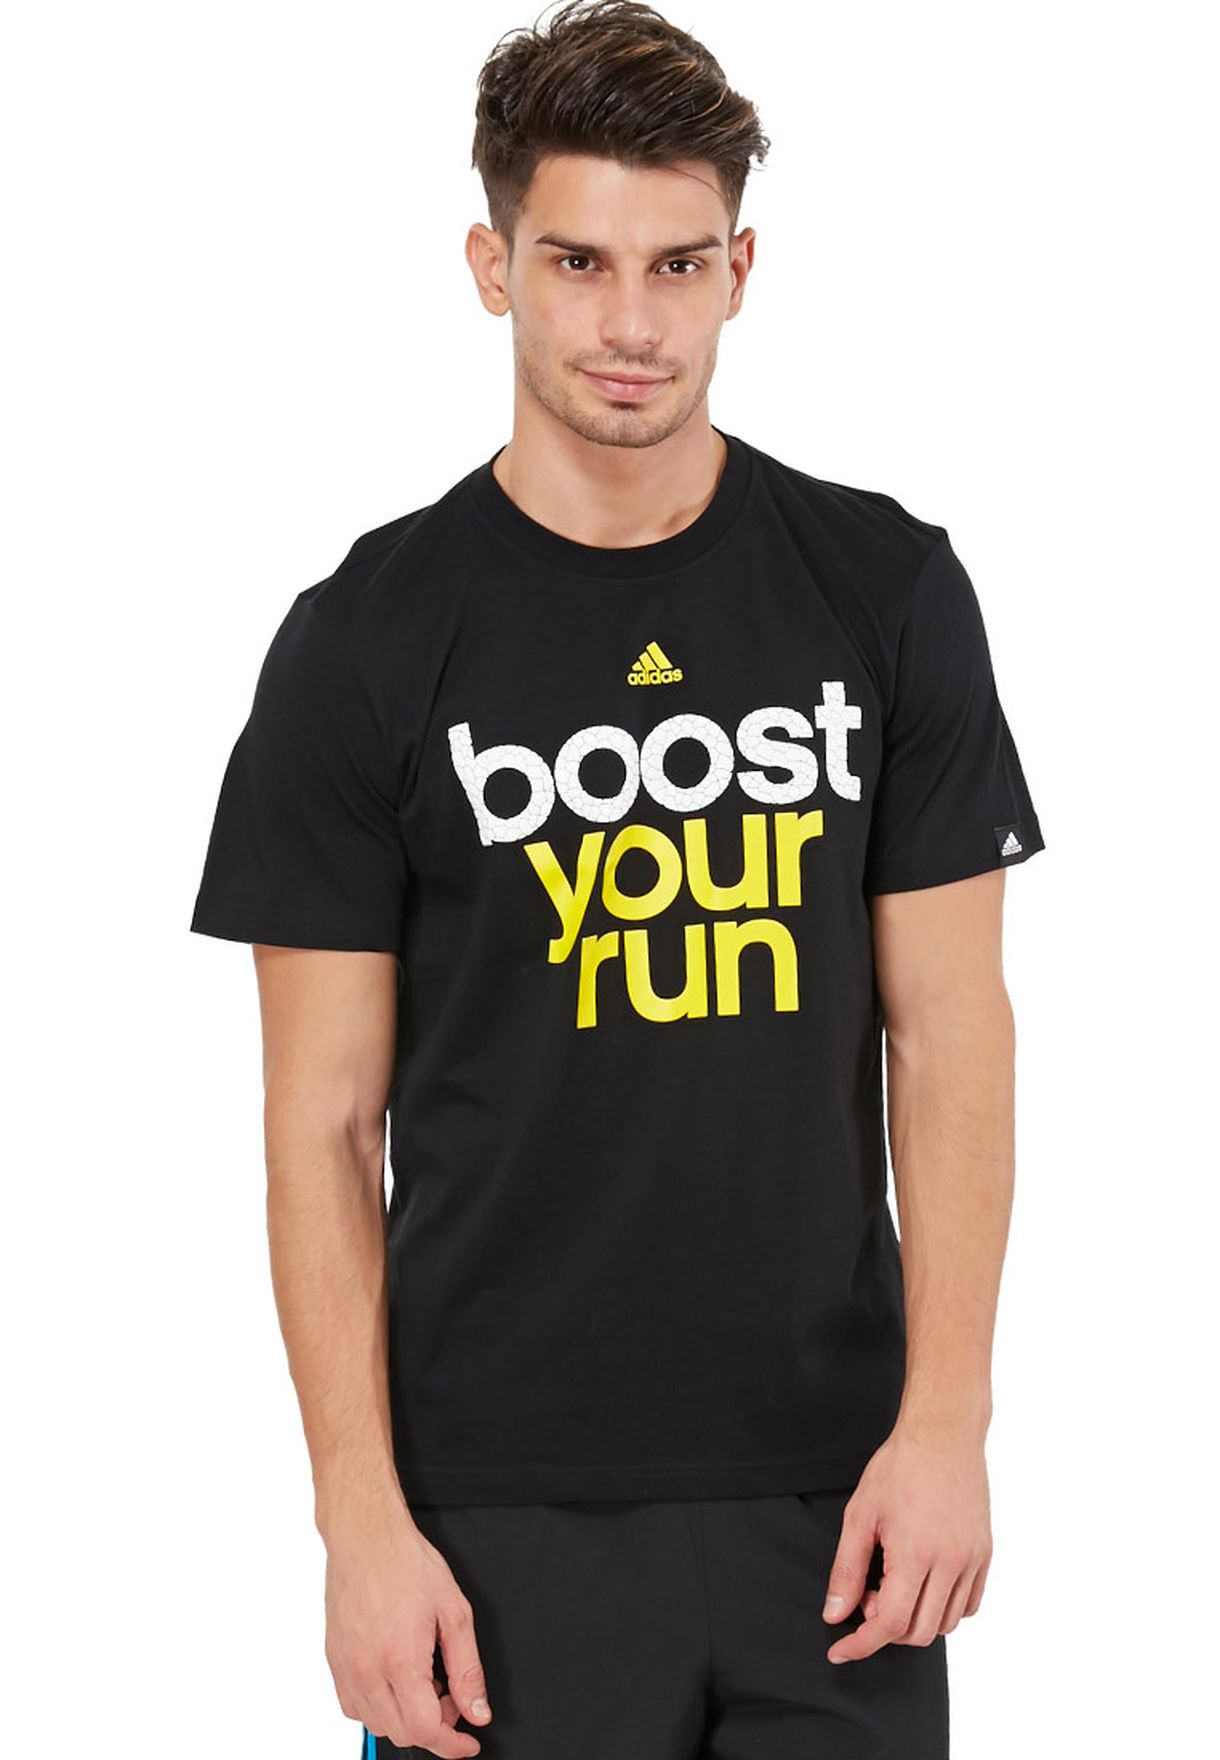 adidas boost your run t shirt - 60 